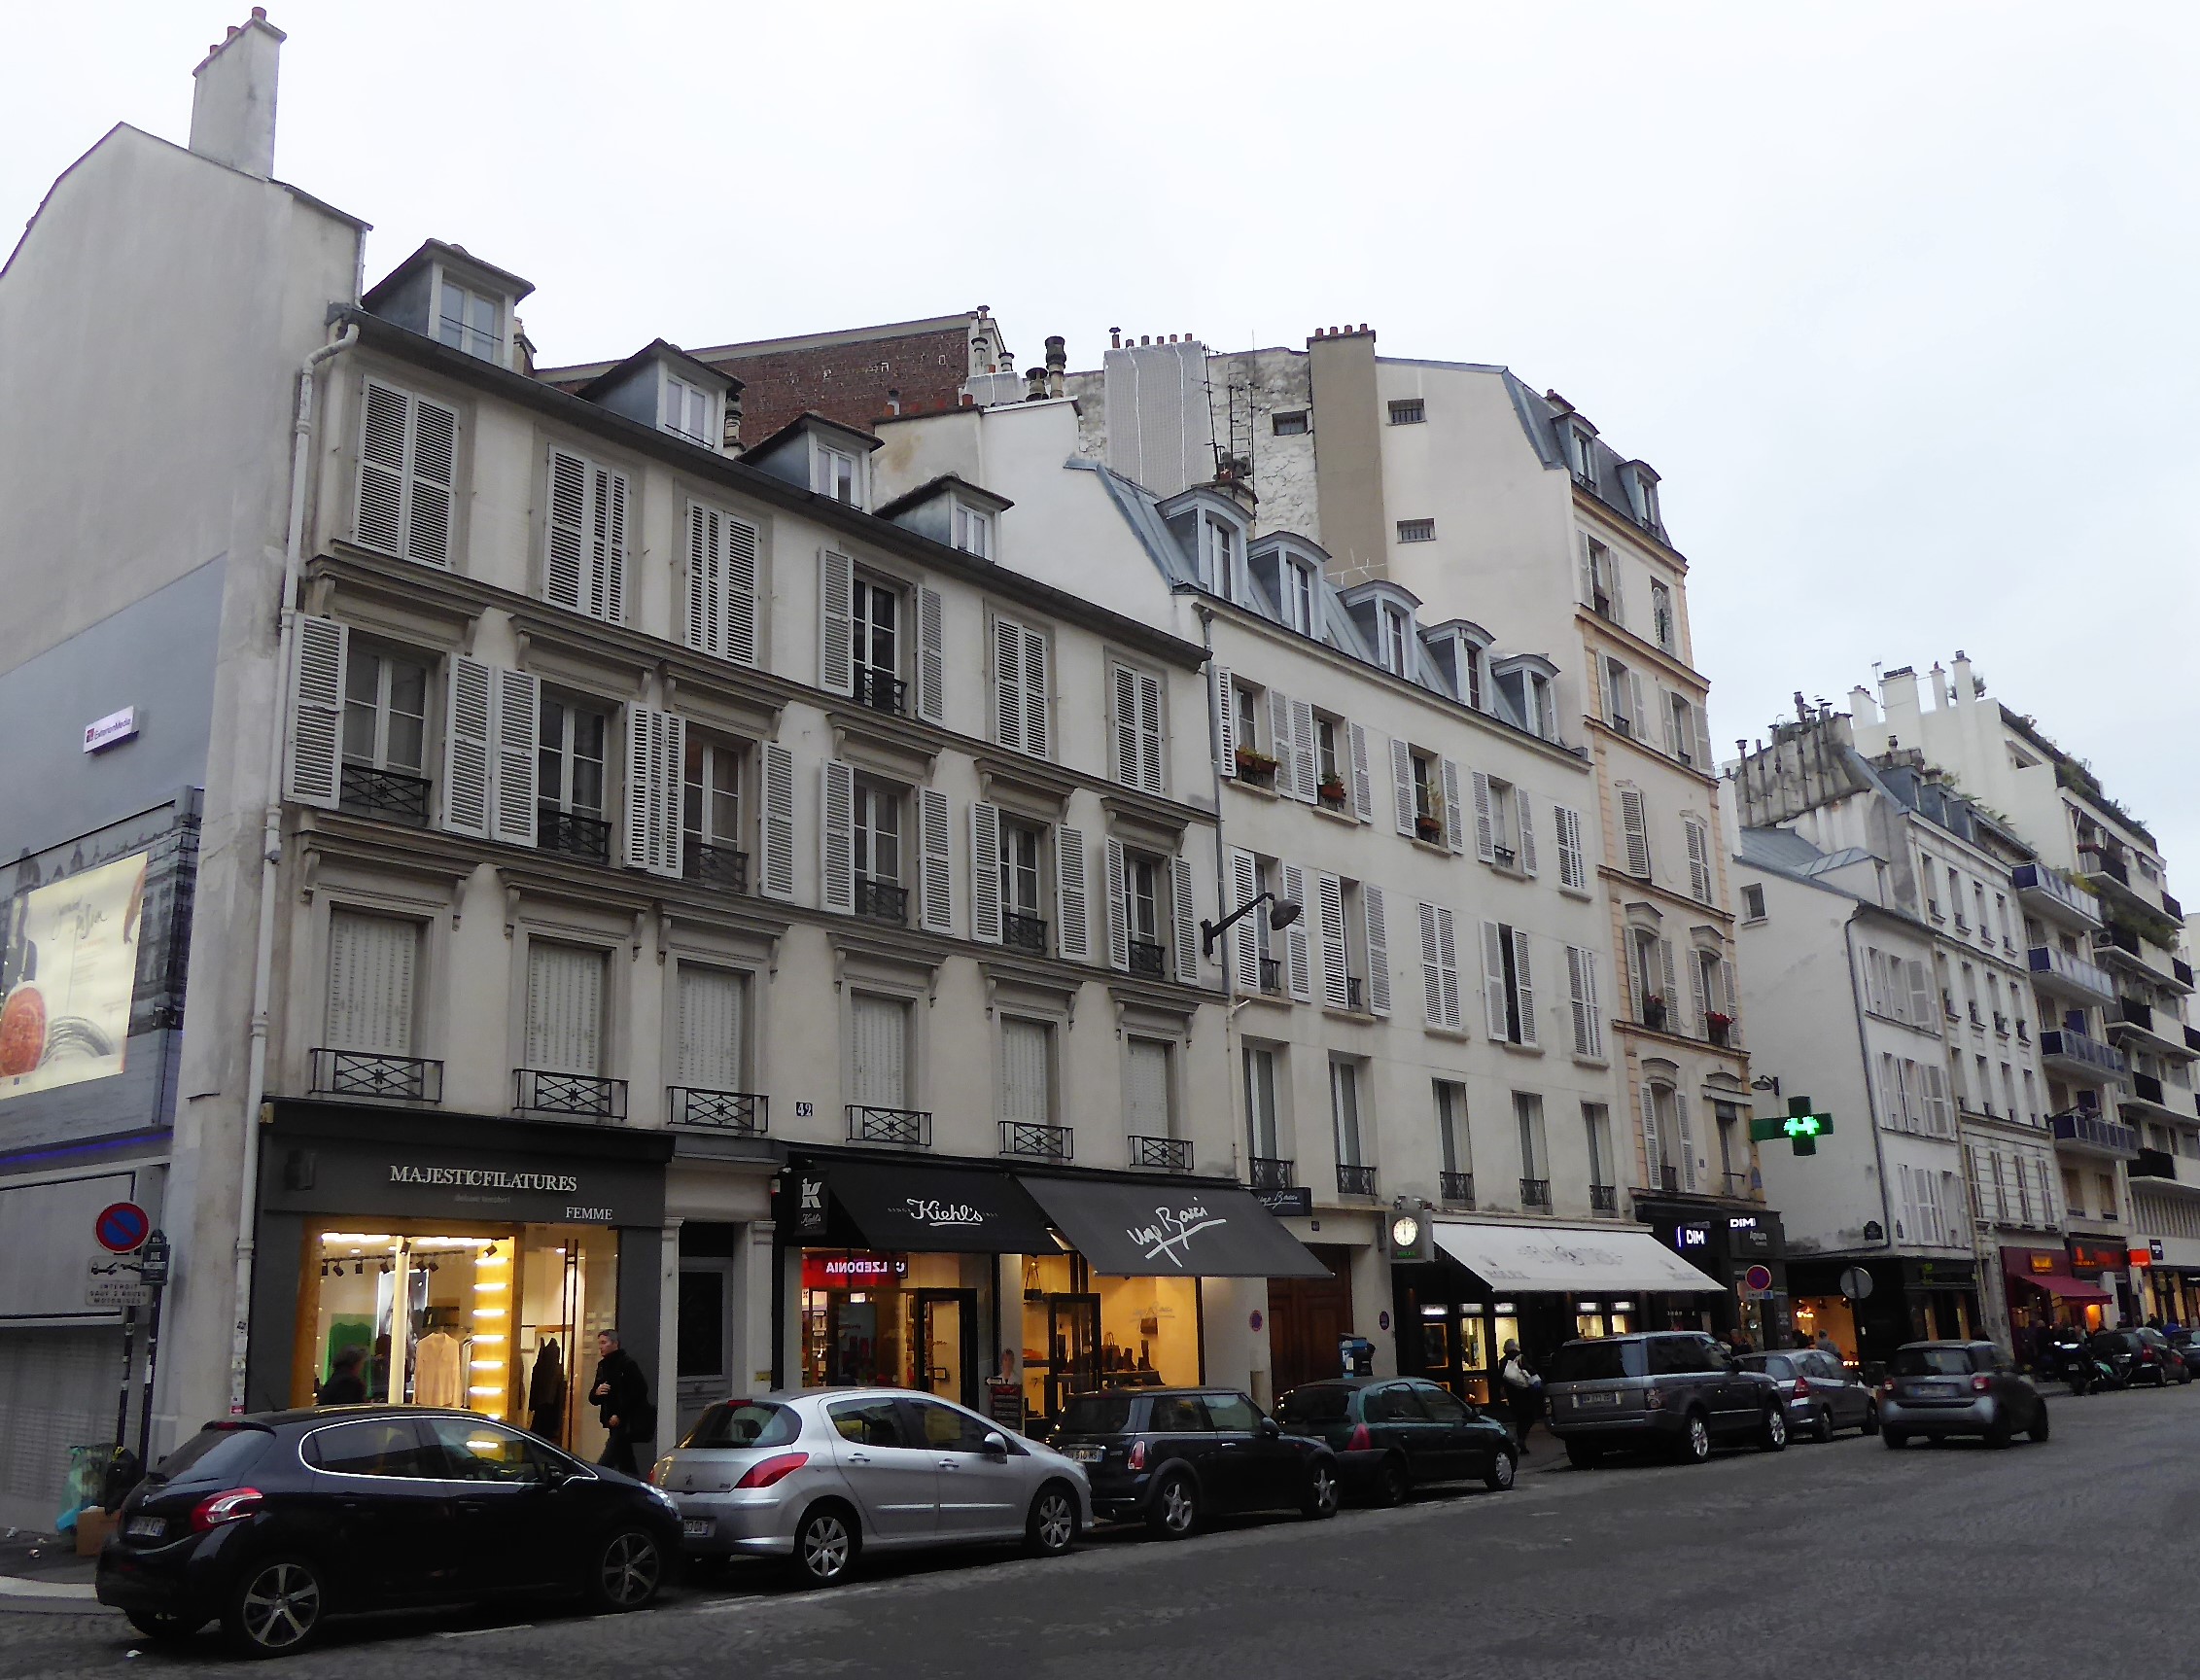 File:La Grande épicerie de Paris - rue de Passy.jpg - Wikimedia Commons